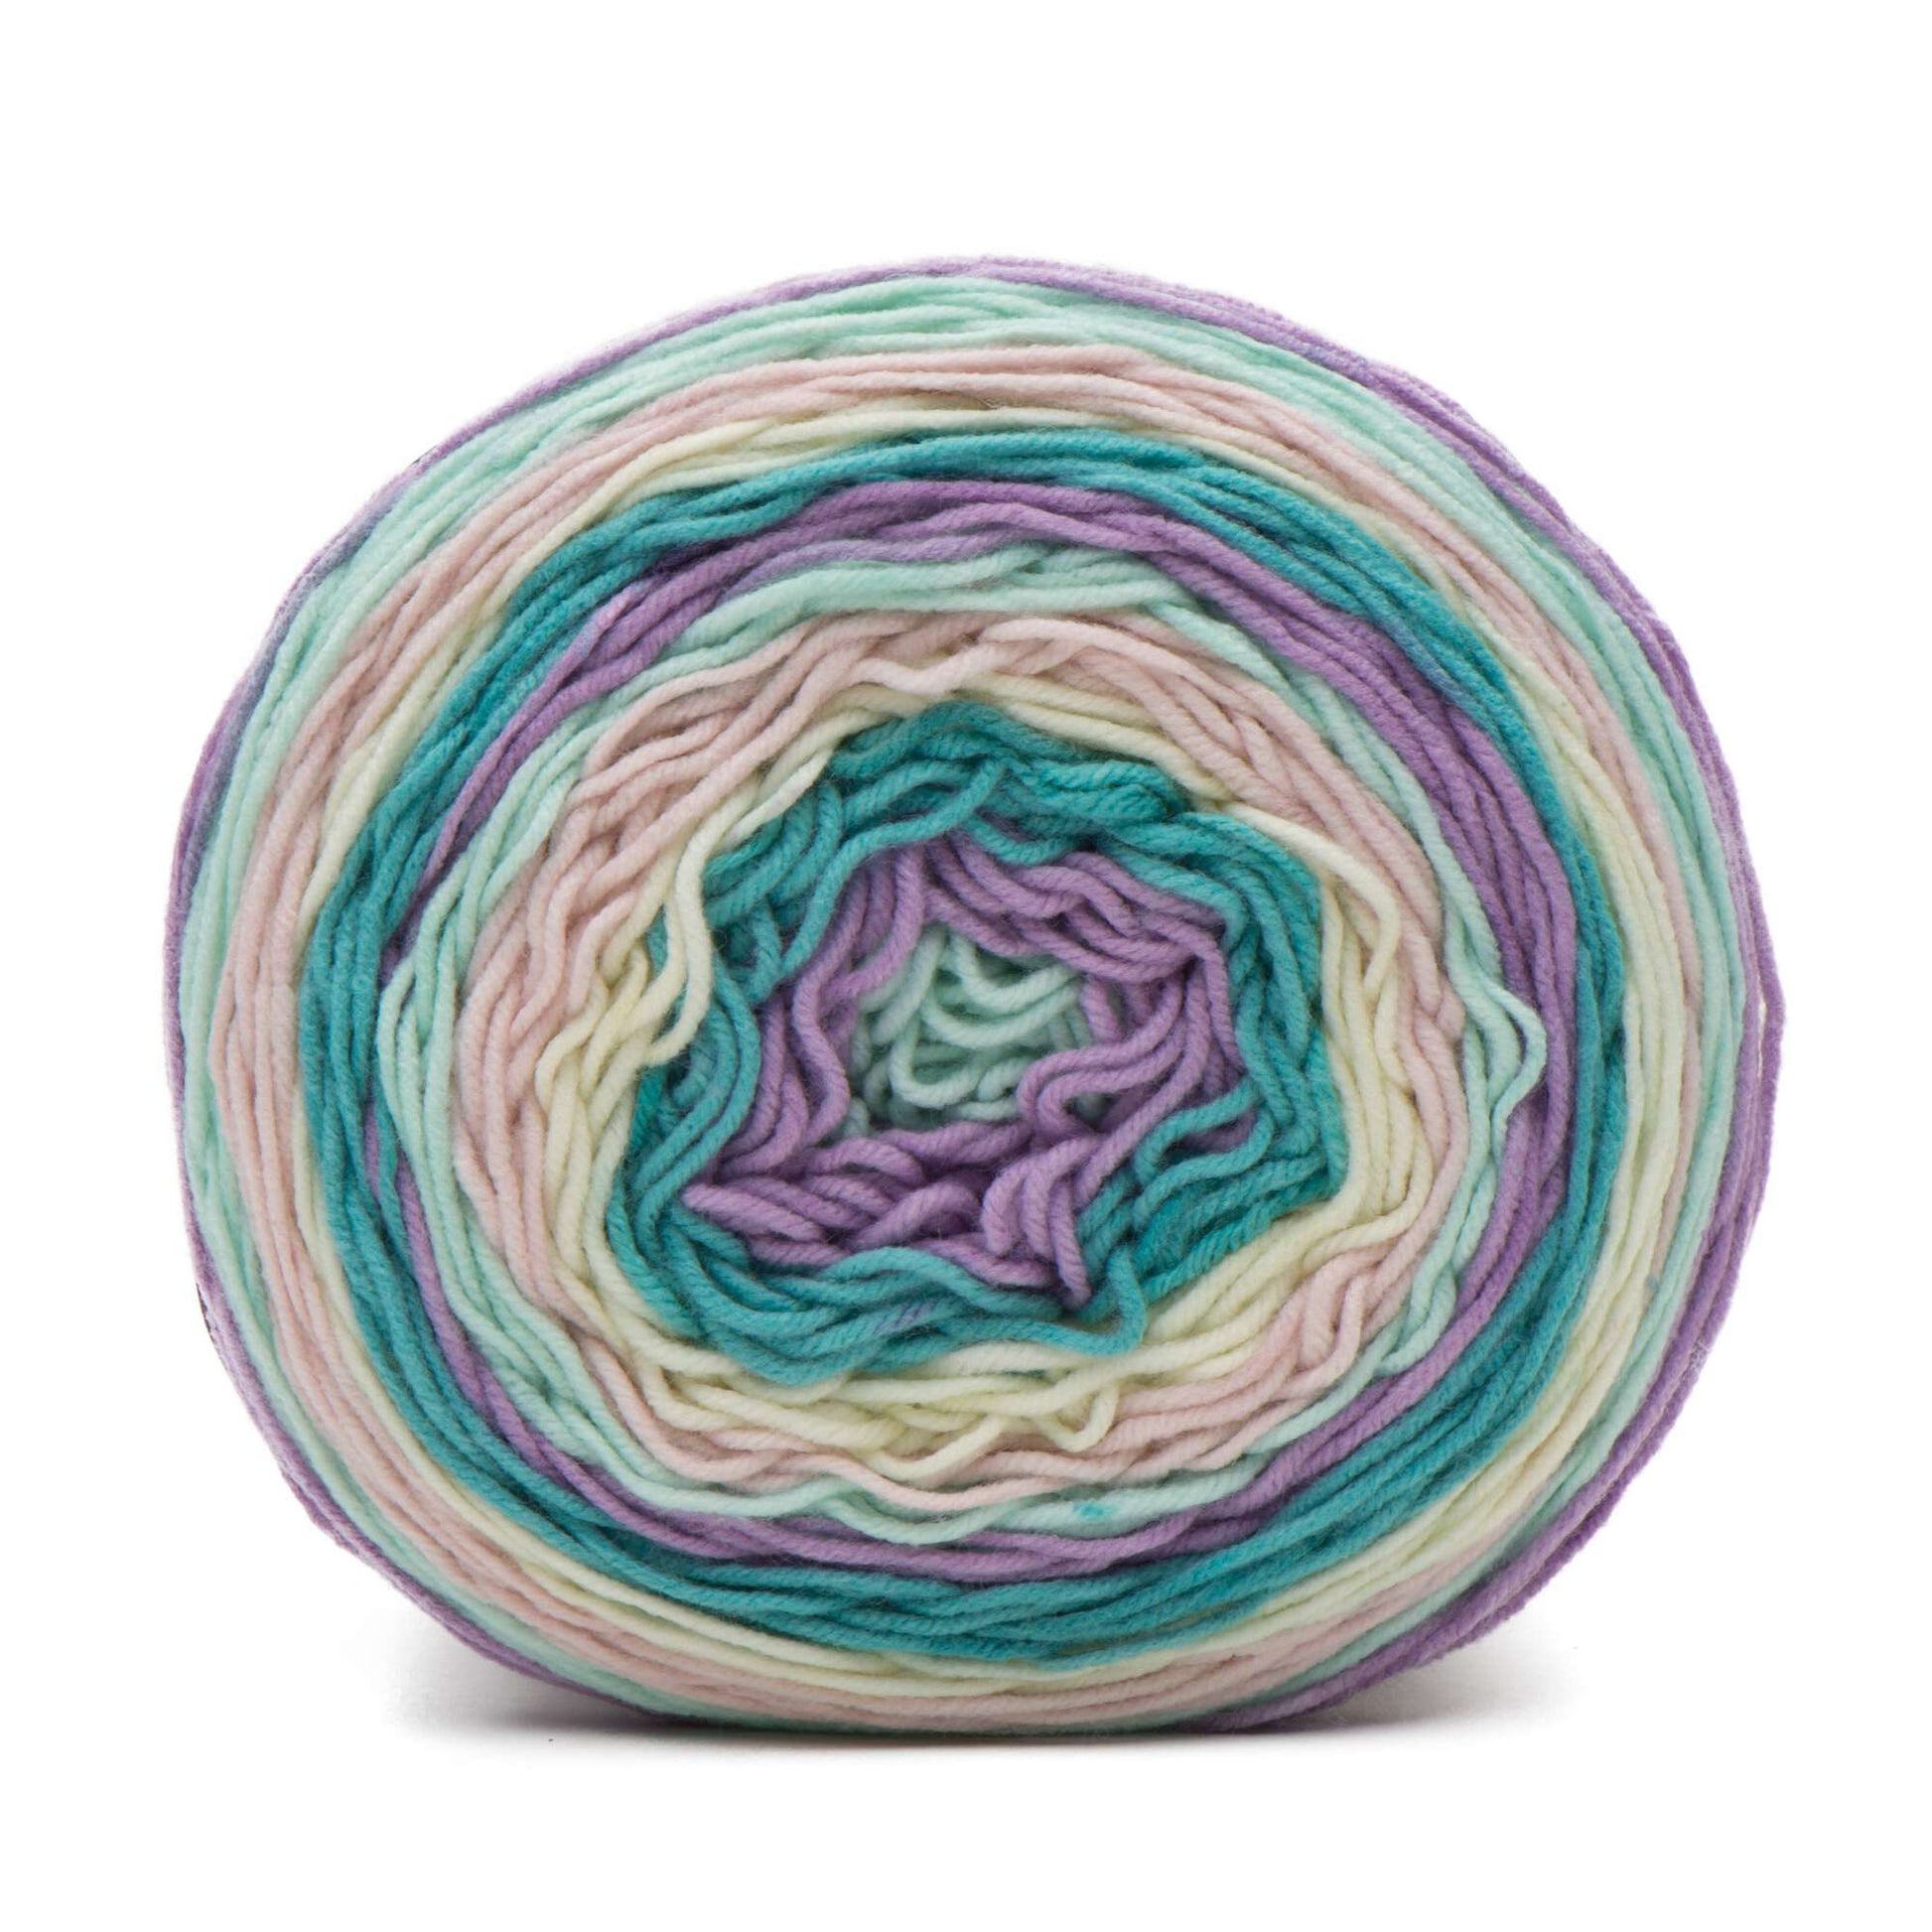 Reef Blue, Blanket Yarn, Caron Anniversary Cakes, Super Bulky 6 Weight,  2lbs of Yarn, Cake Yarn, Crochet, Knitting, Chunky Yarn 